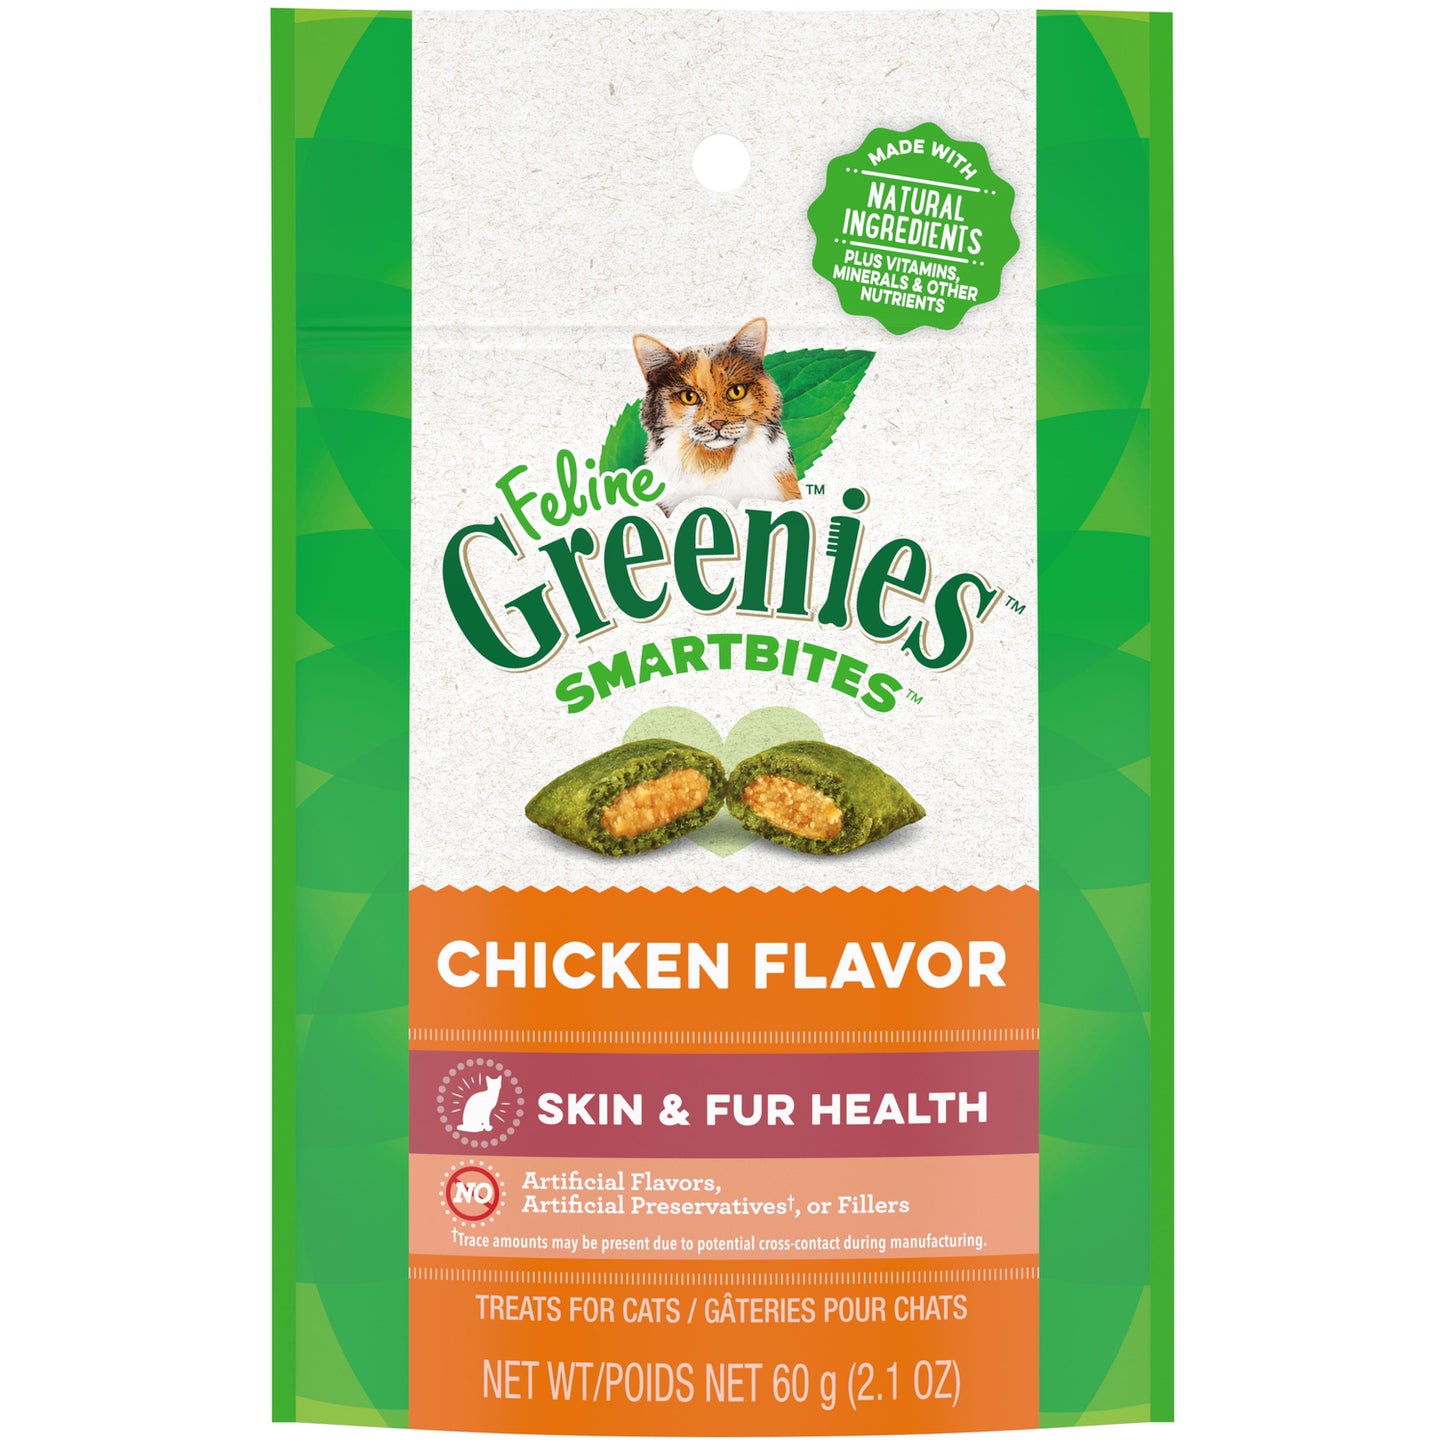 FELINE GREENIES SMARTBITES Skin & Fur Crunchy and Soft Natural Cat Treats, Chicken Flavor, 2.1 Oz. Pack